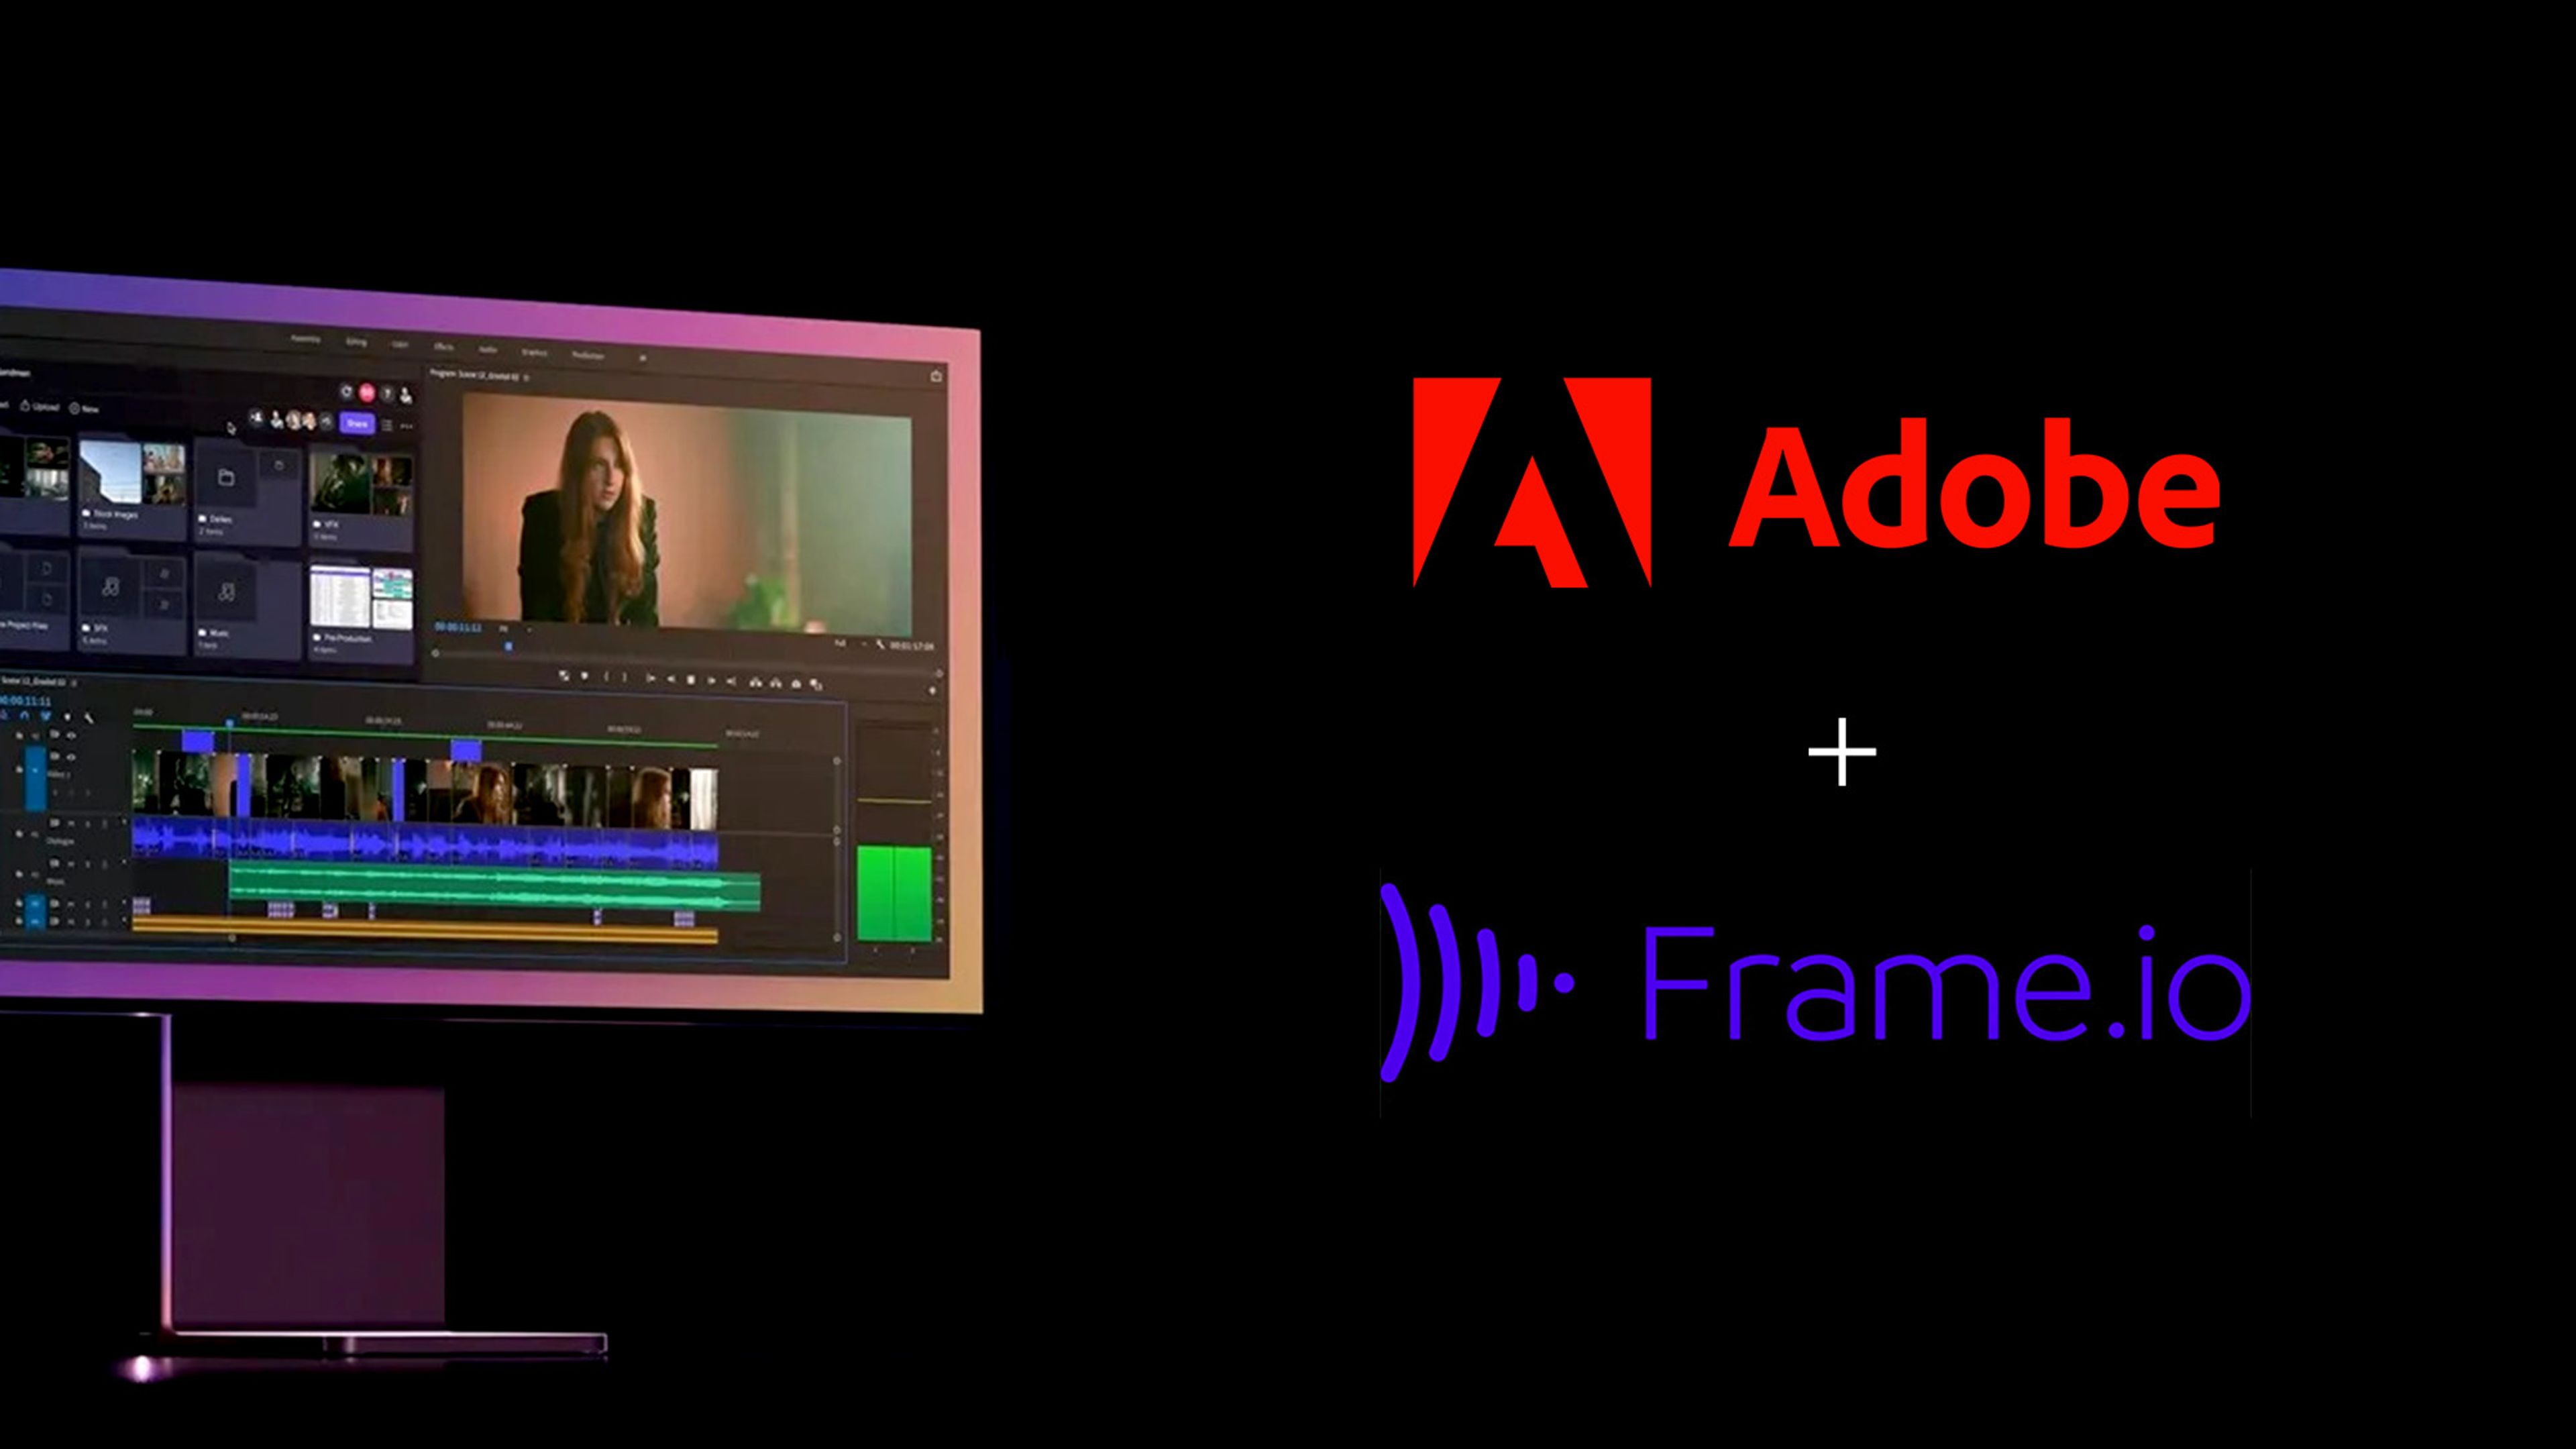 Adobe and Frame.io logos